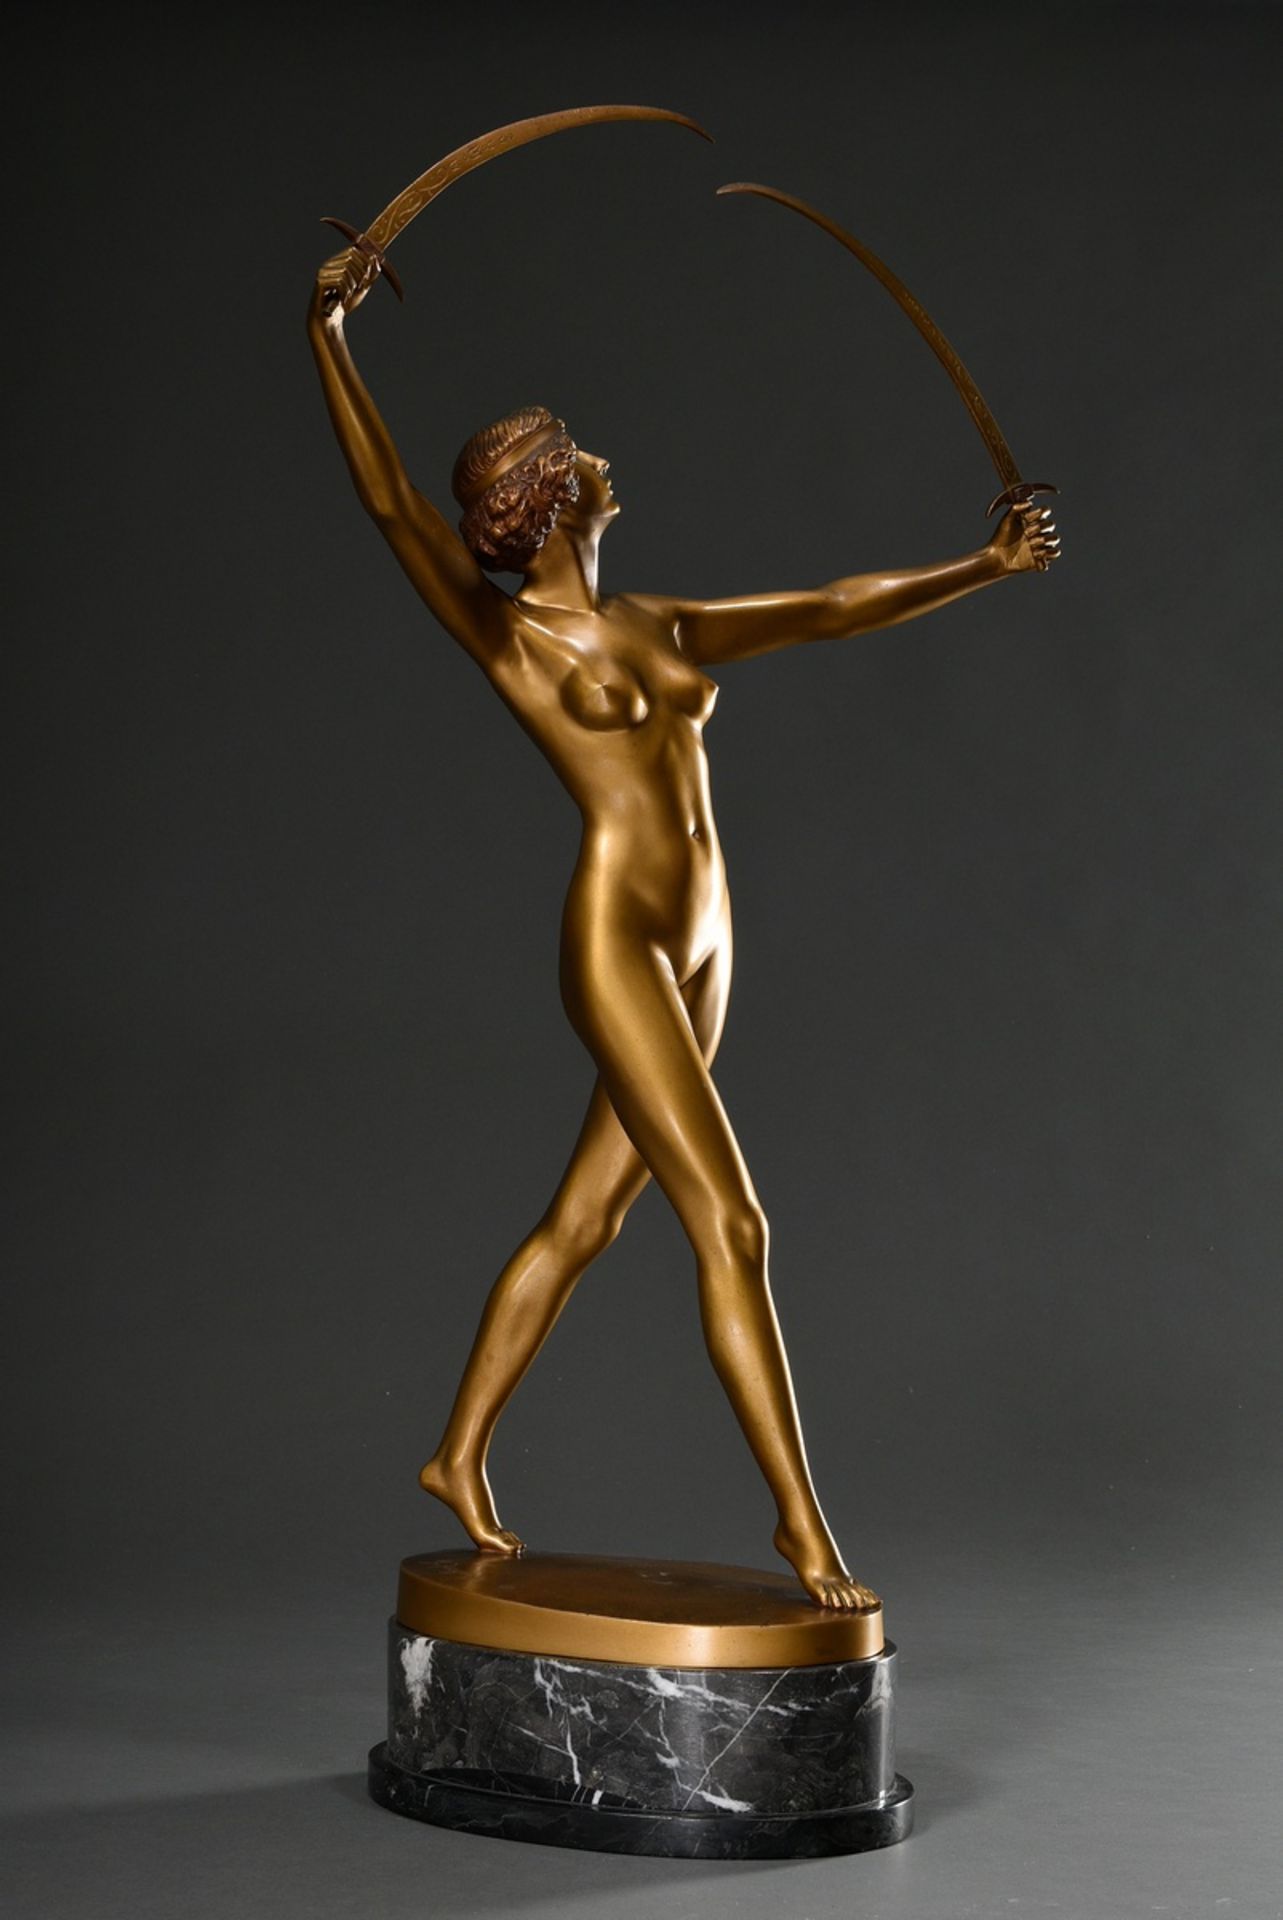 Jaeger, Gotthilf (1871-1933) "Sabre Dancer", around 1925, bronze with gold patina on grey marble pl - Image 5 of 10